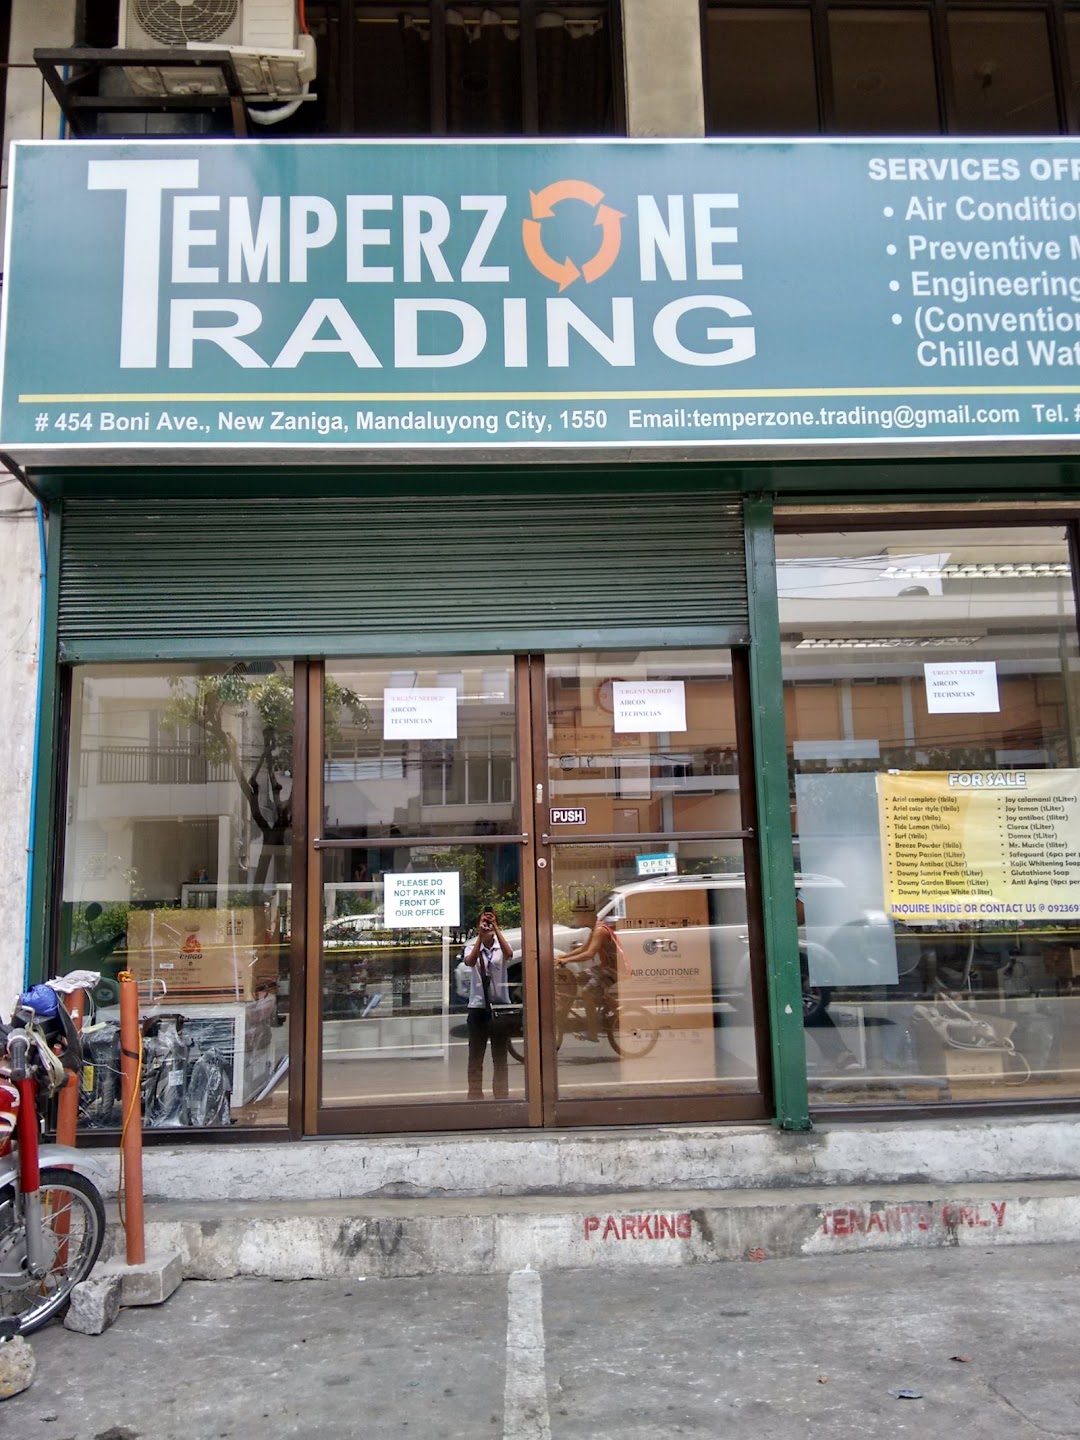 Temperzone Trading